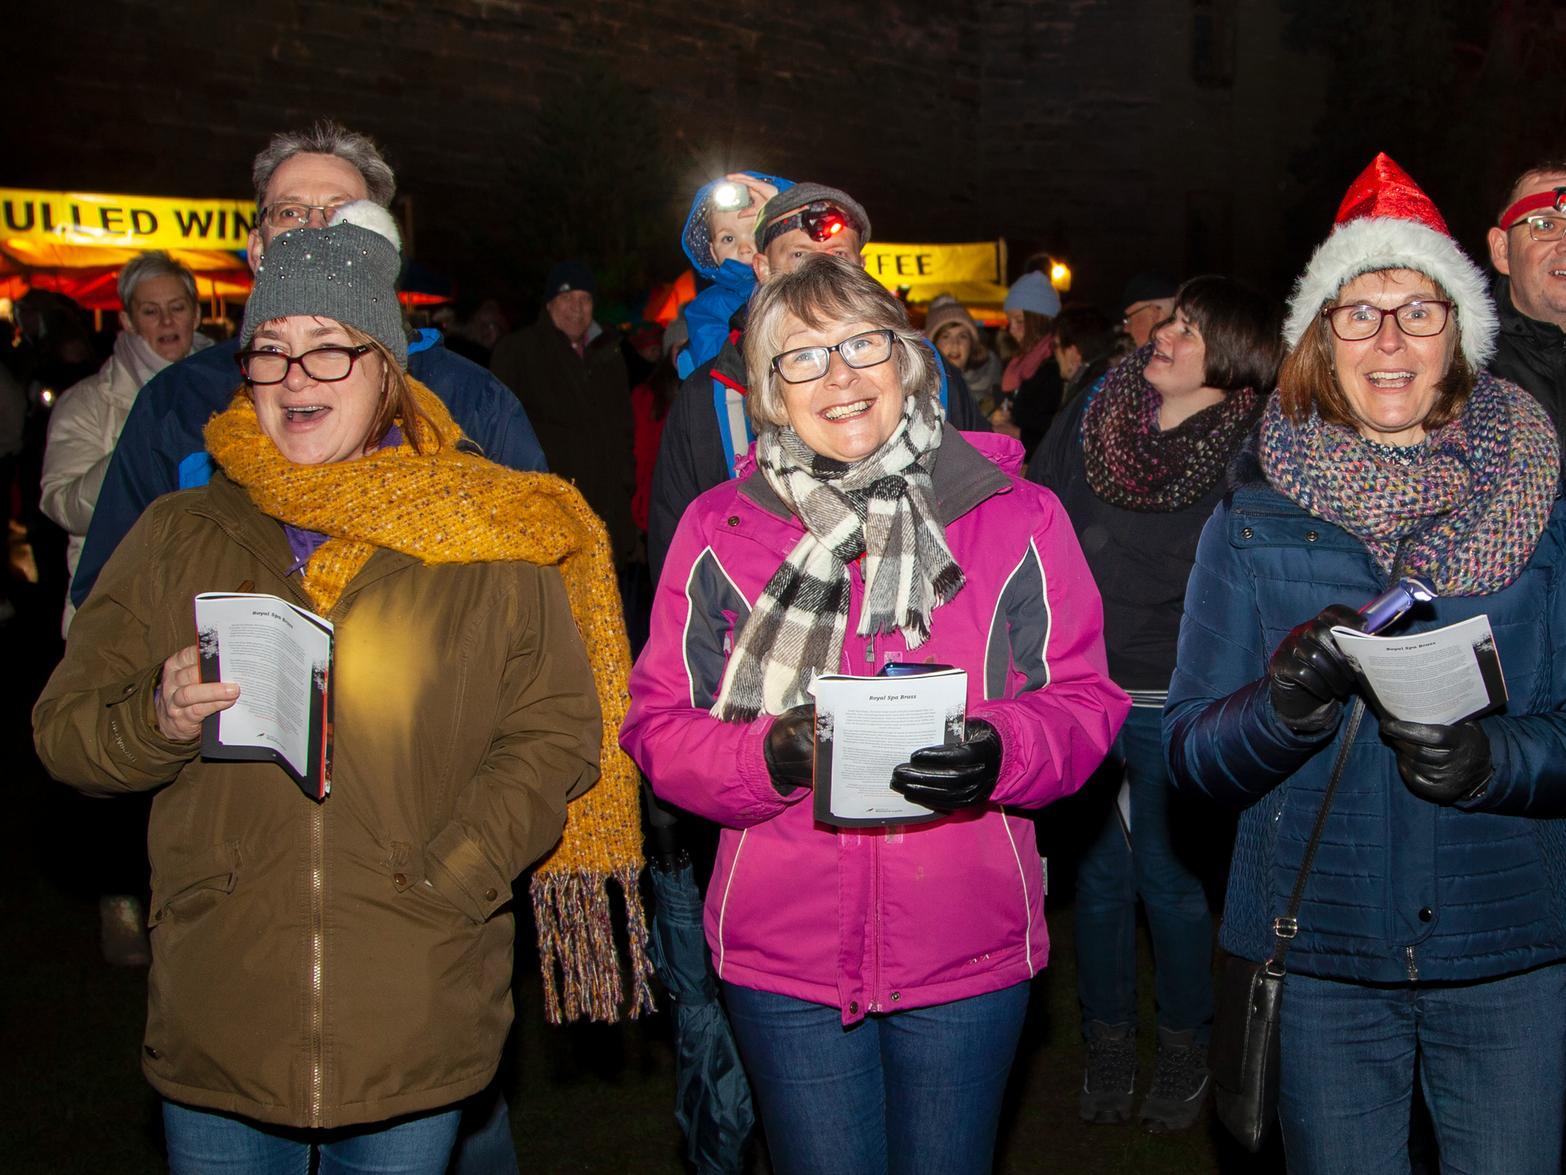 Carols at Warwick Castle 2019. Photo by Lydia Meteyard